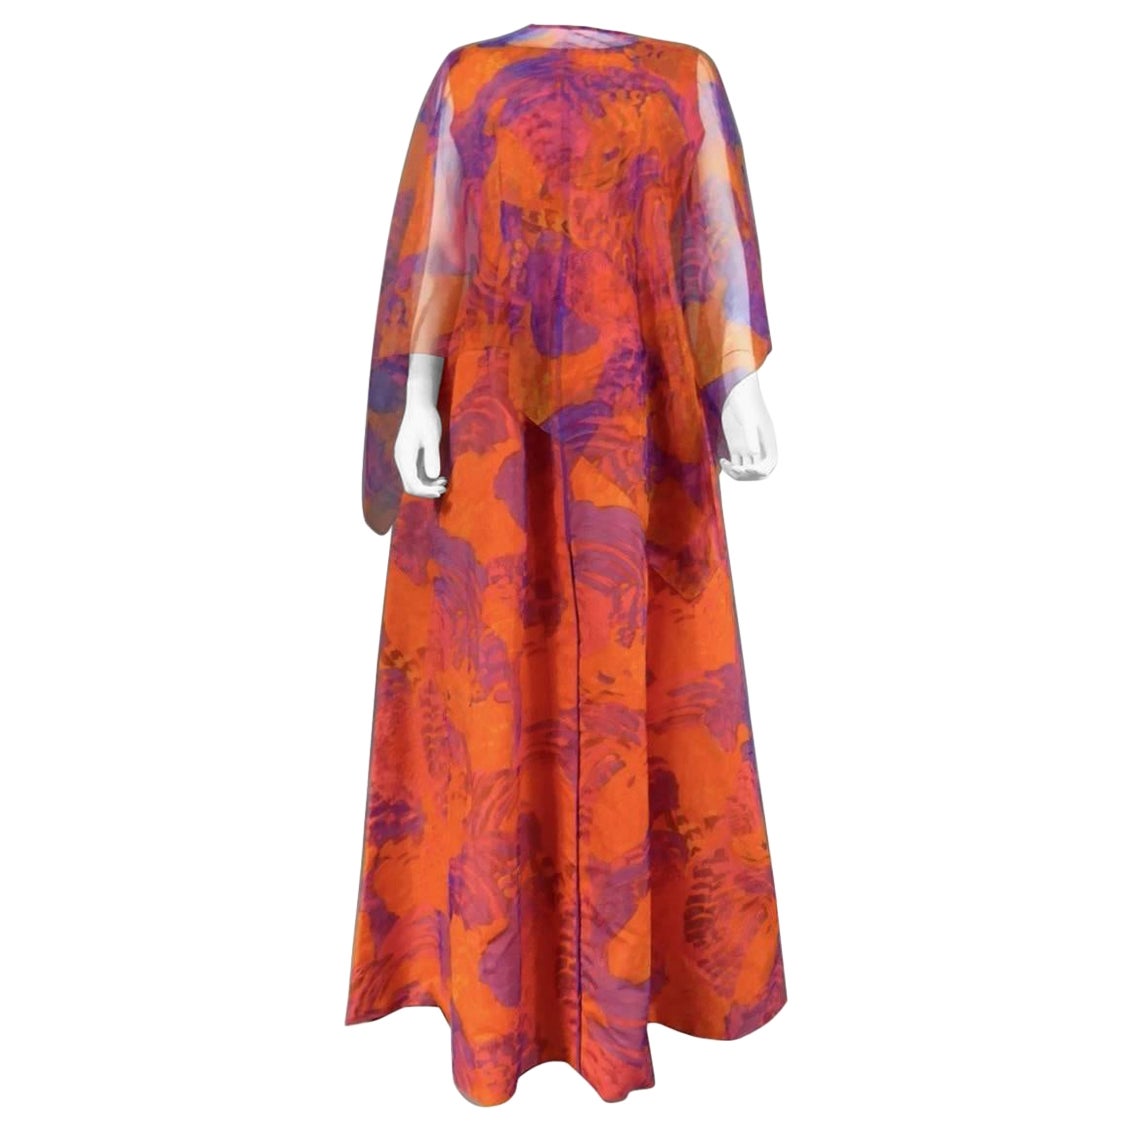 A Printed Chiffon Evening Dress by Madame Grès Haute Couture Circa 1970